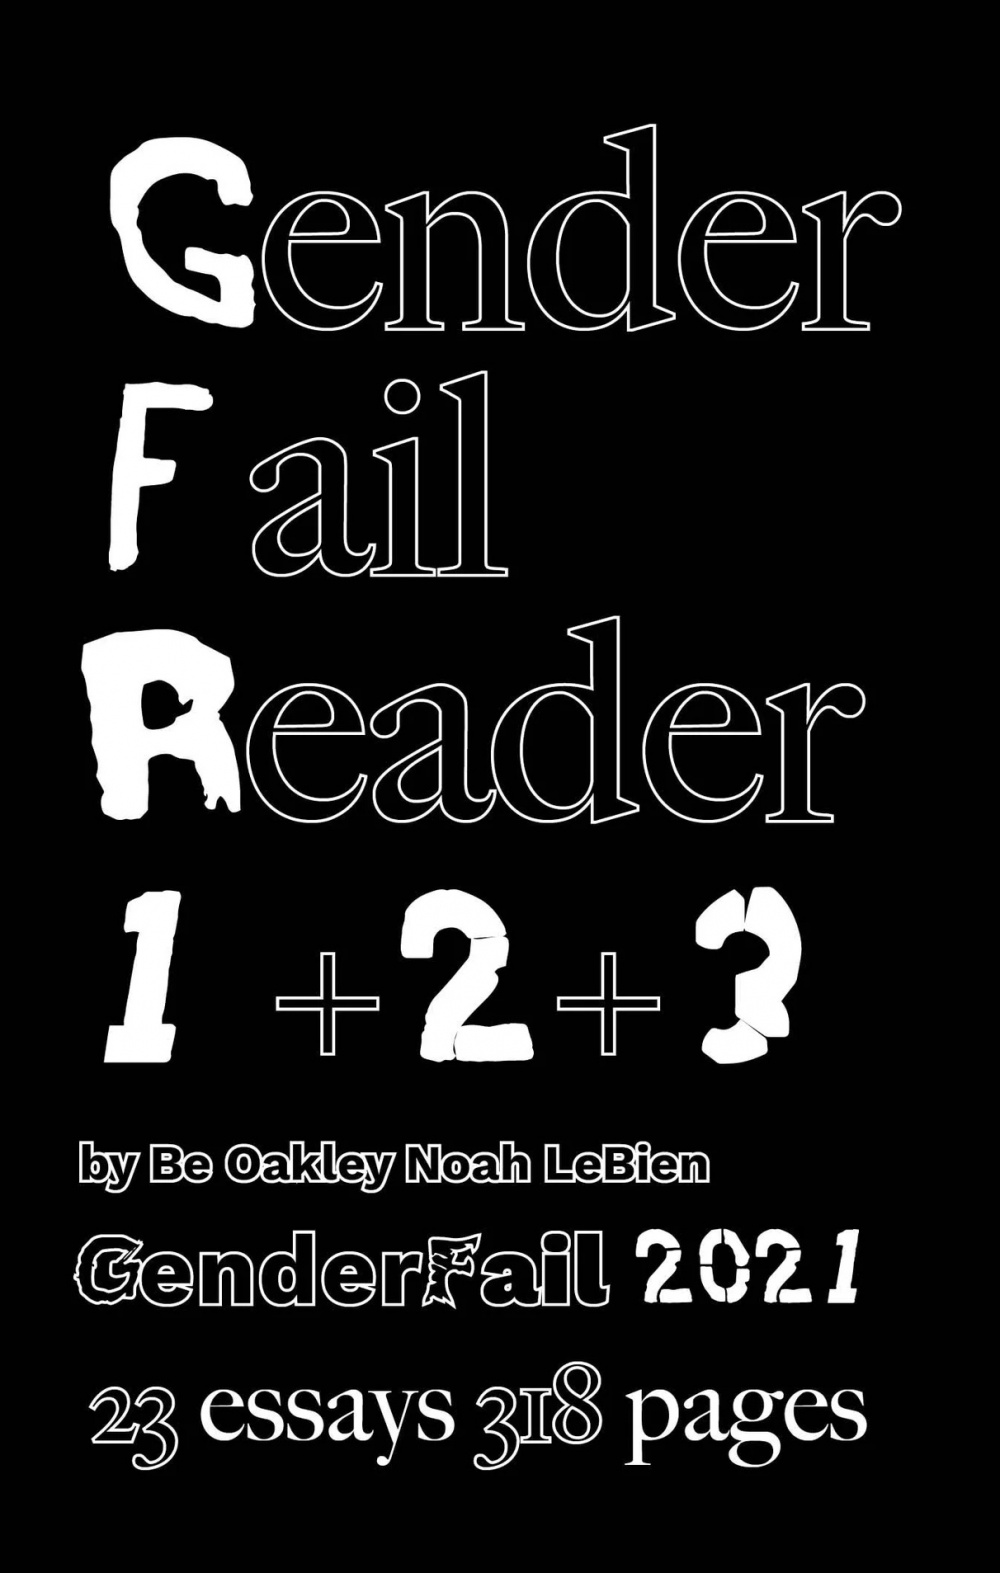 GenderFail Reader 1 + 2 + 3 - 23 Essays 318 pages